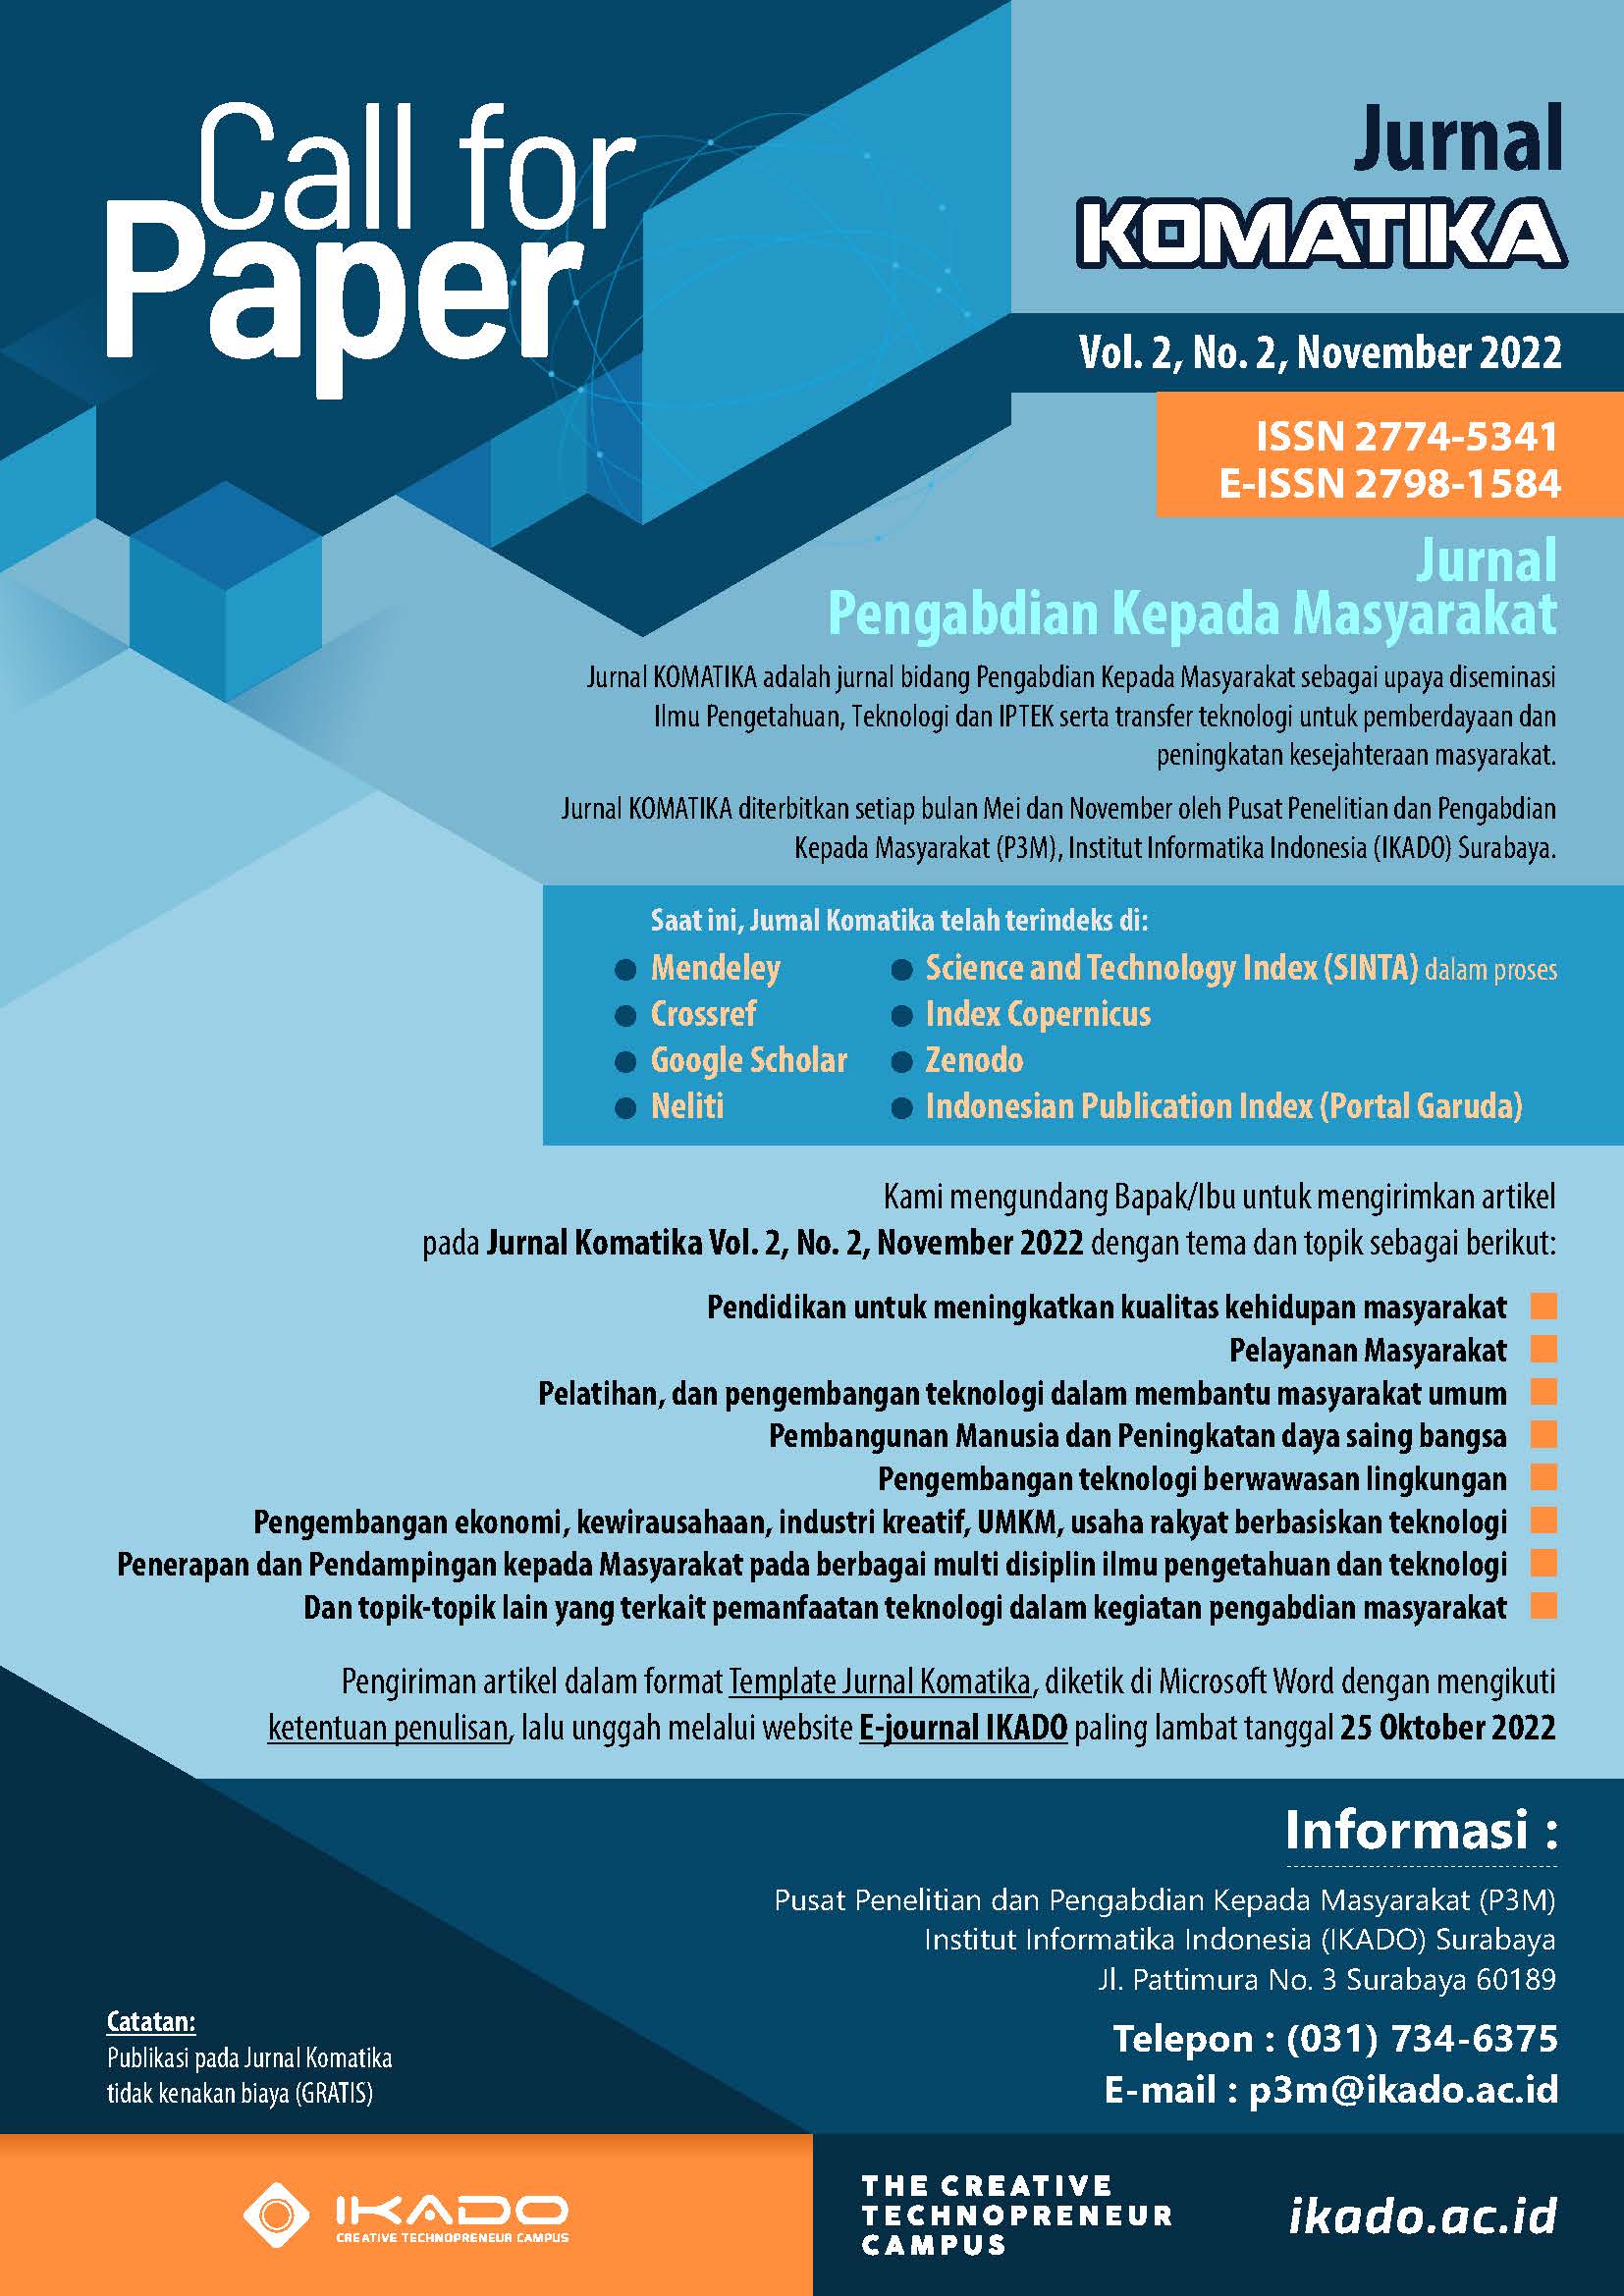 Institut Informatika Indonesia (IKADO) Call for Paper Komatika